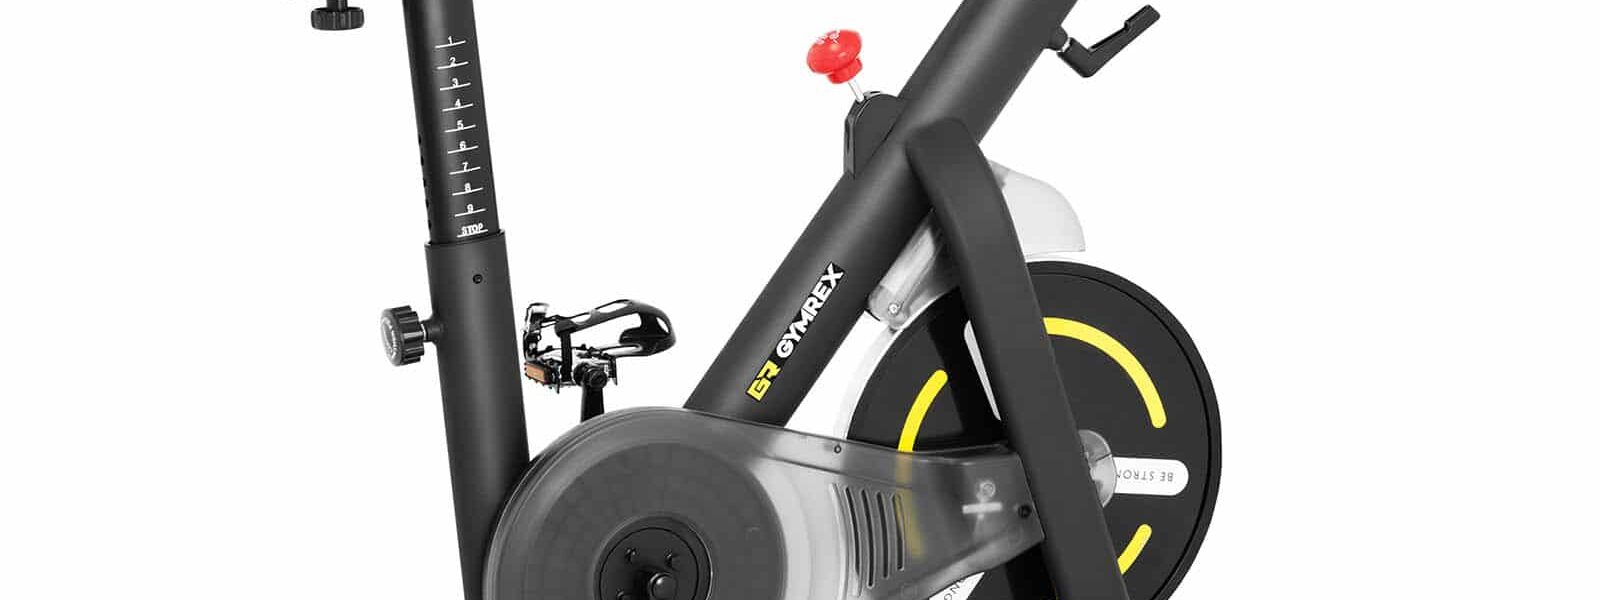 Bicicleta estática – masa de inercia 13 kg – LCD